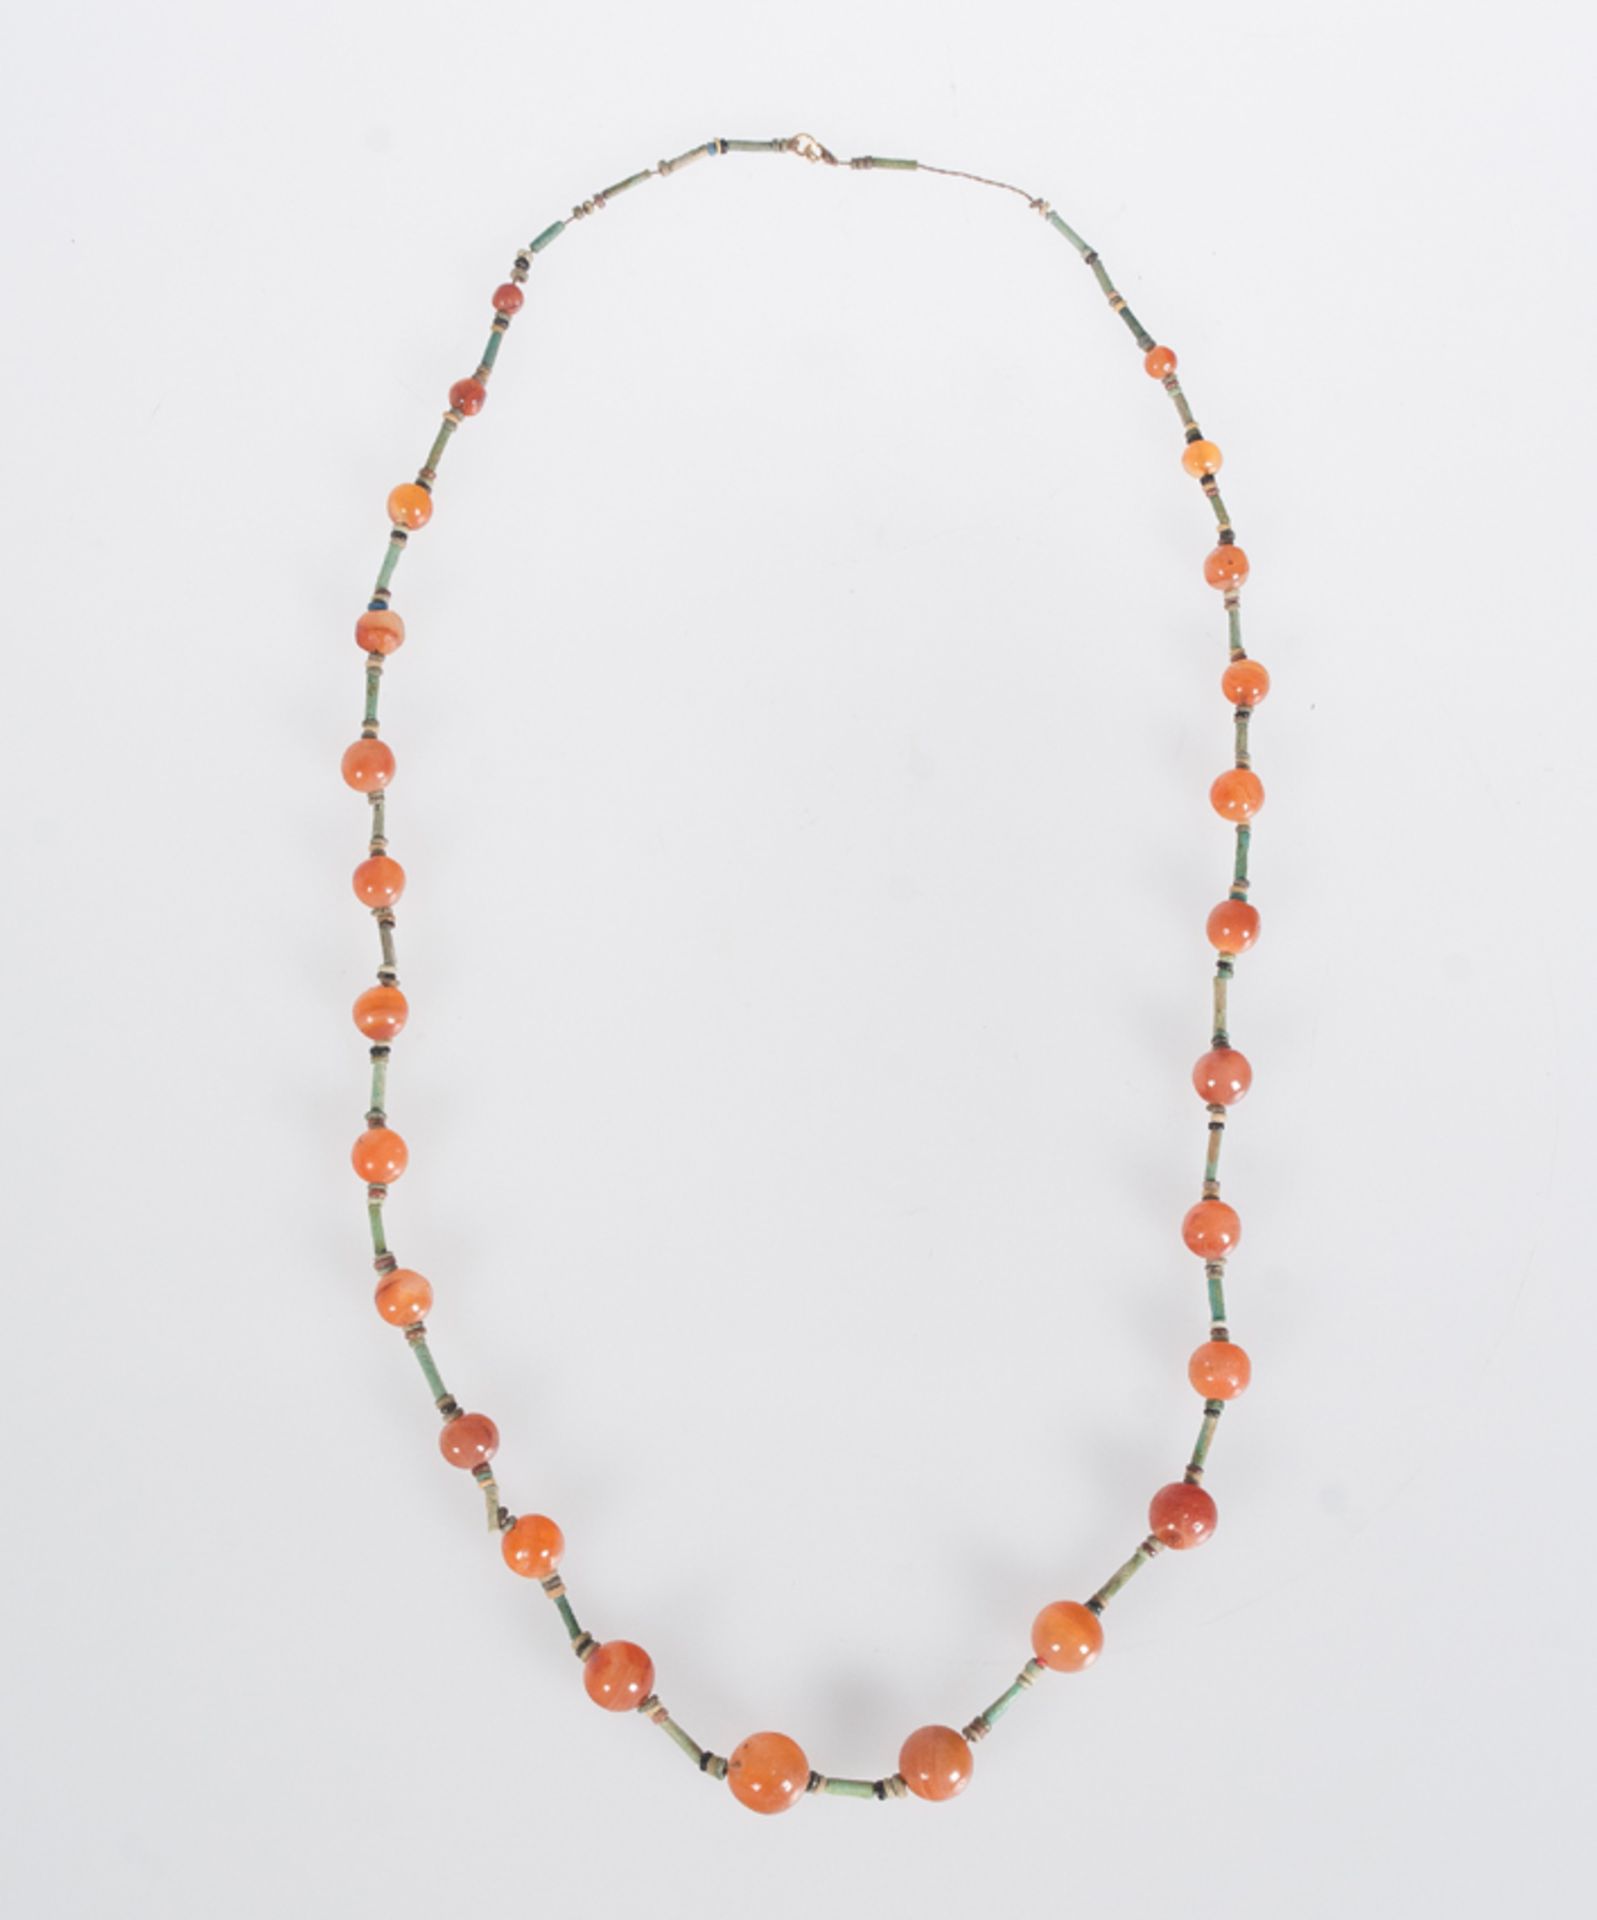 Antique carnelian necklace.